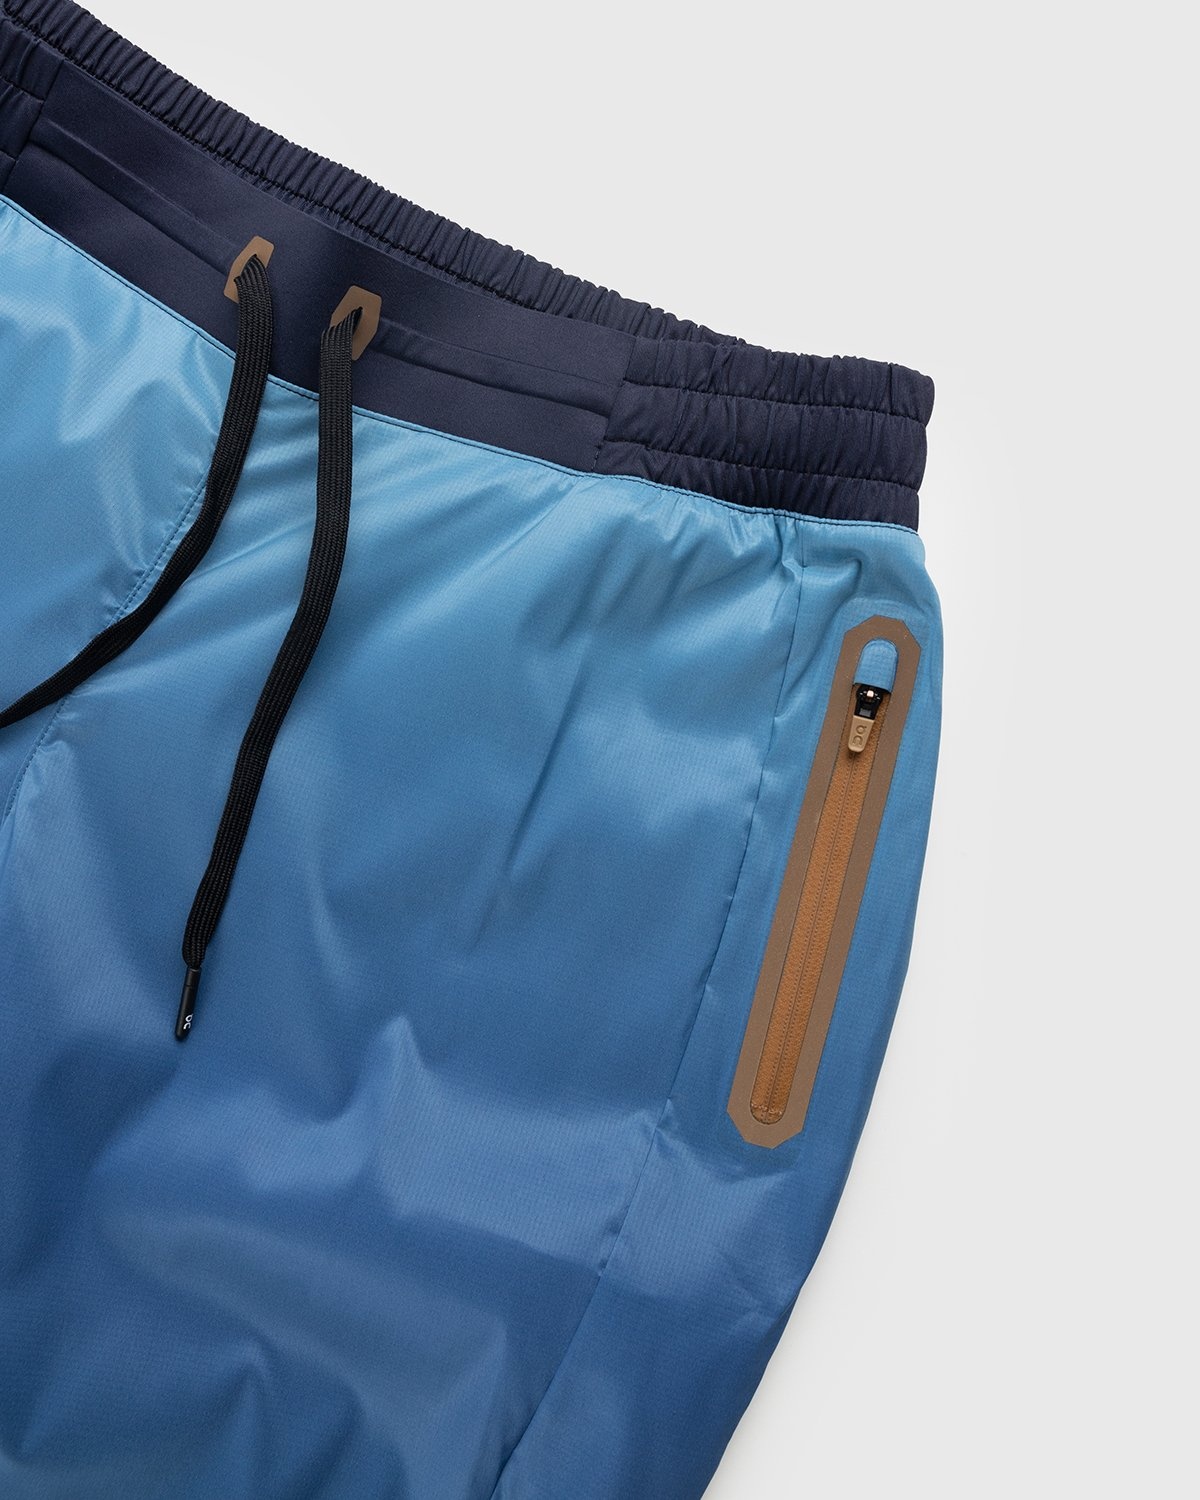 Loewe x On – Women's Technical Running Pants Gradient Blue - Pants - Blue - Image 5